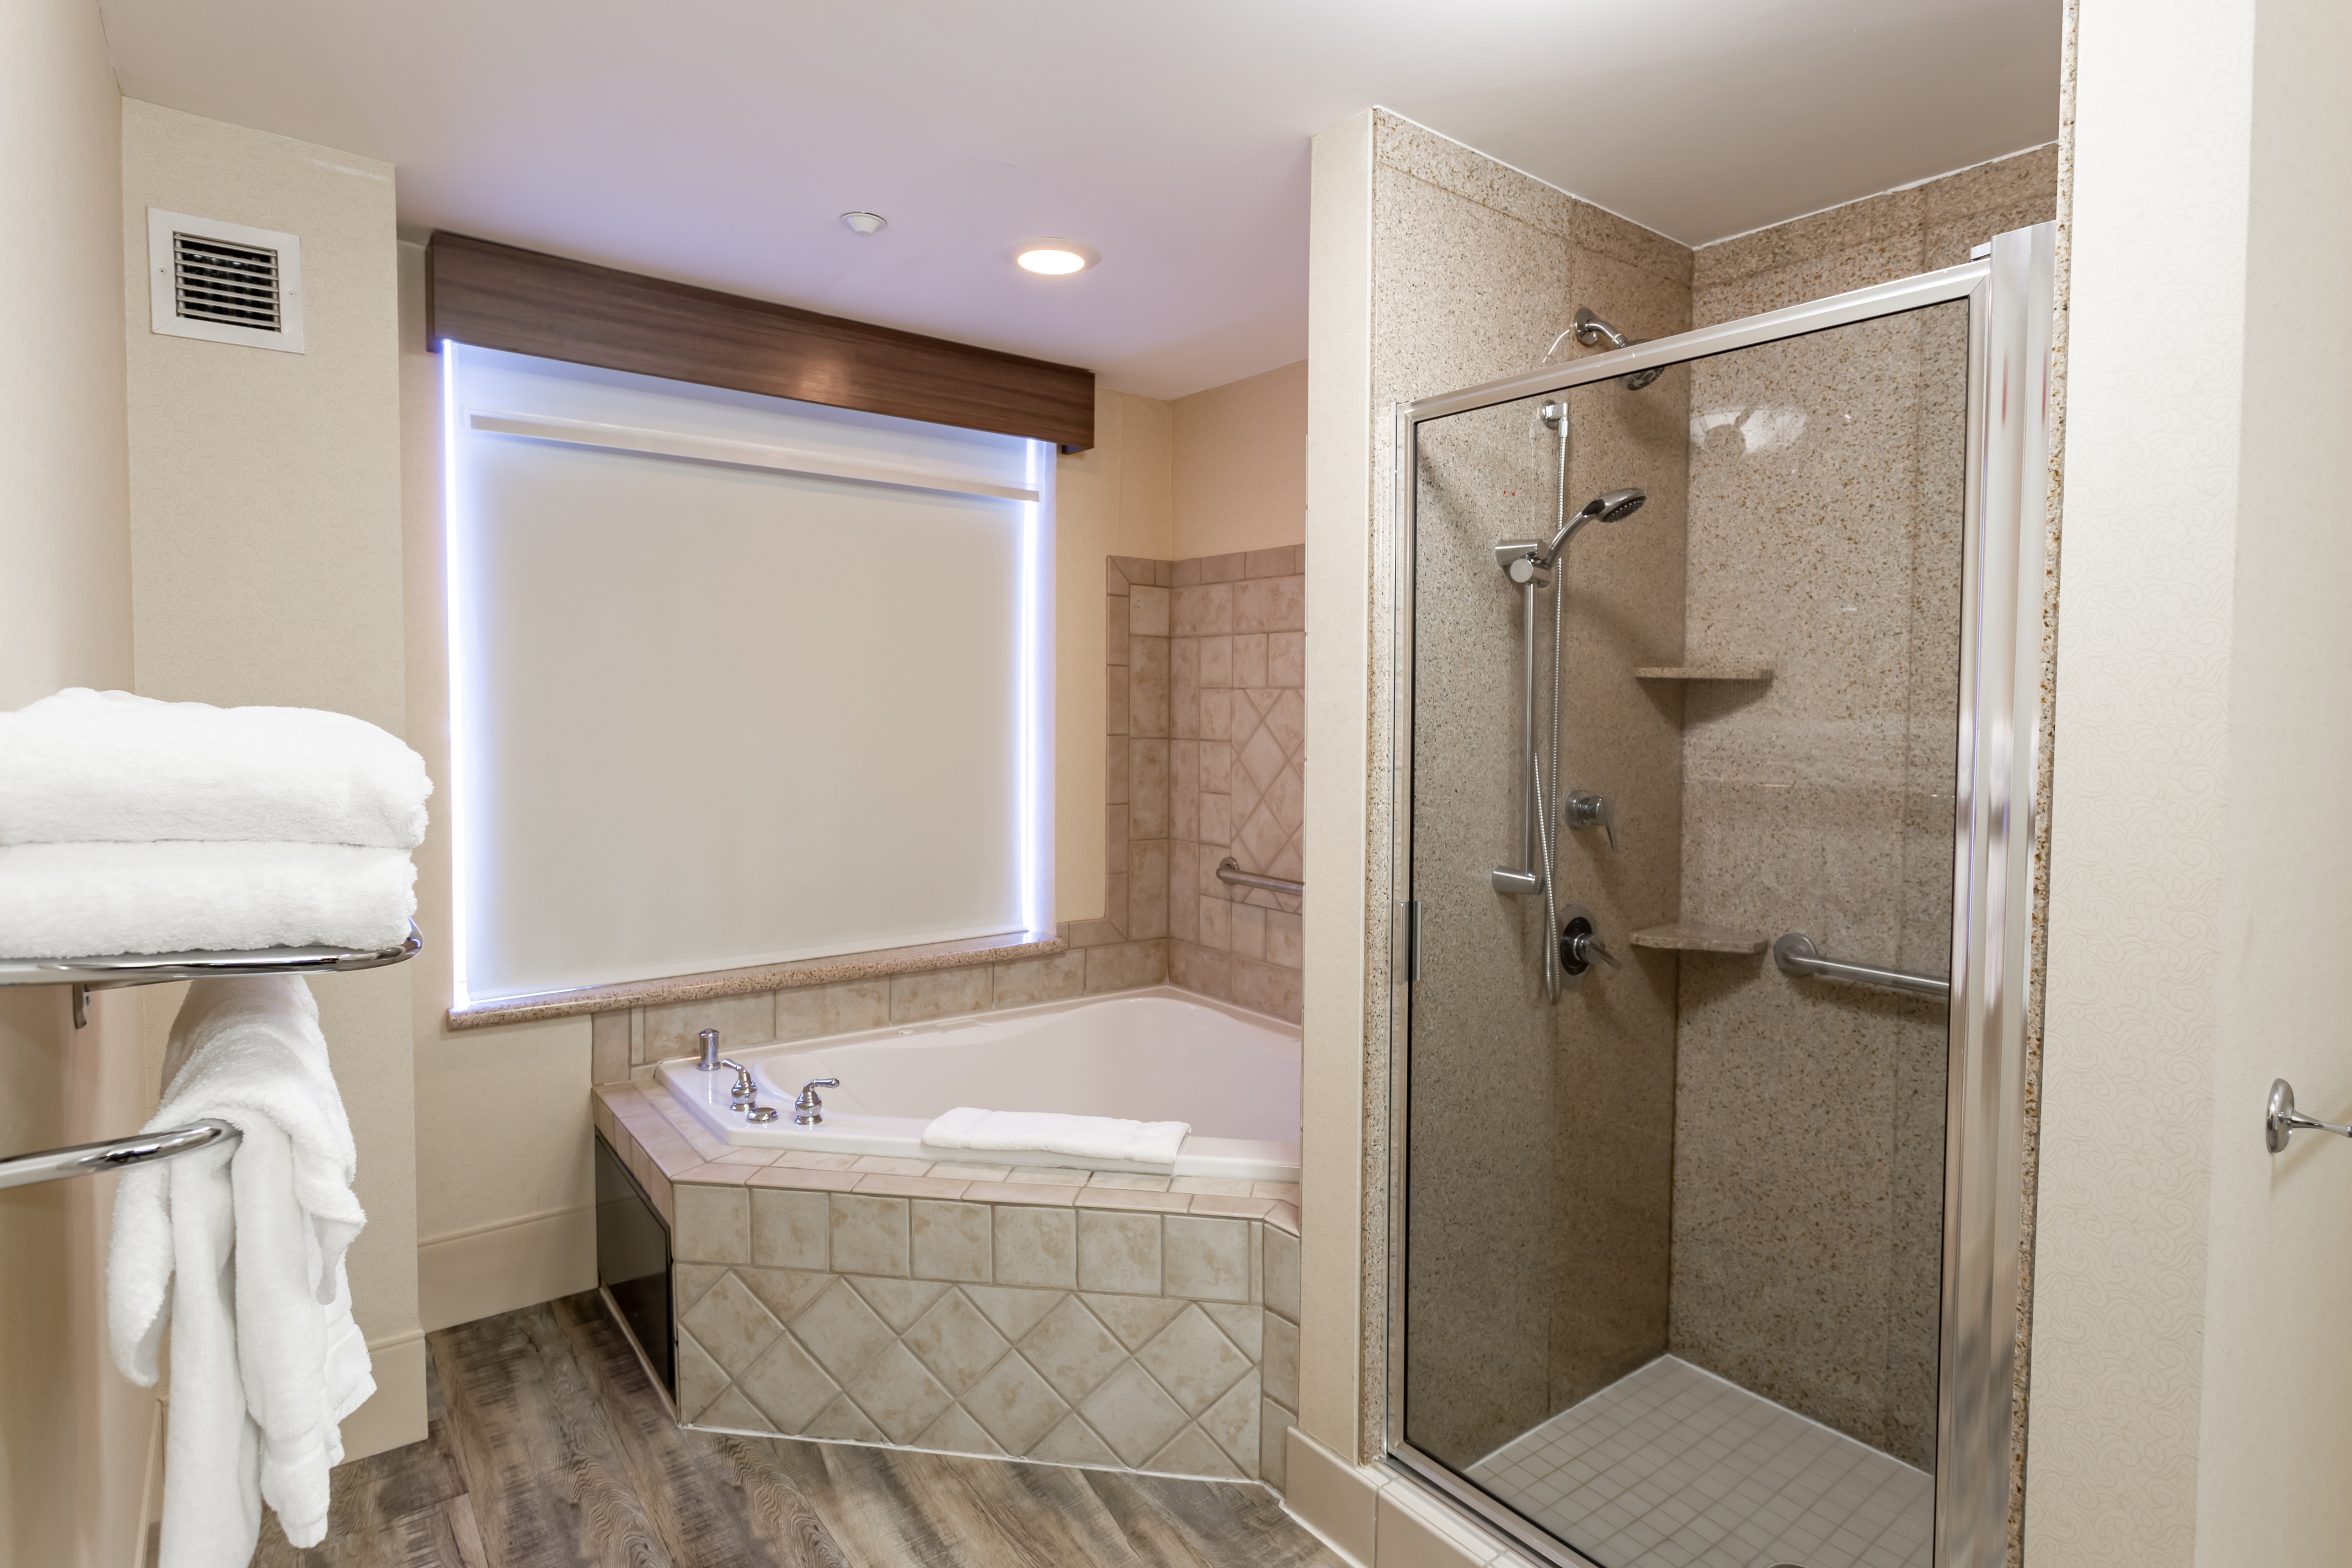 Guest Room Bathroom w/Whirlpool Tub, Shower